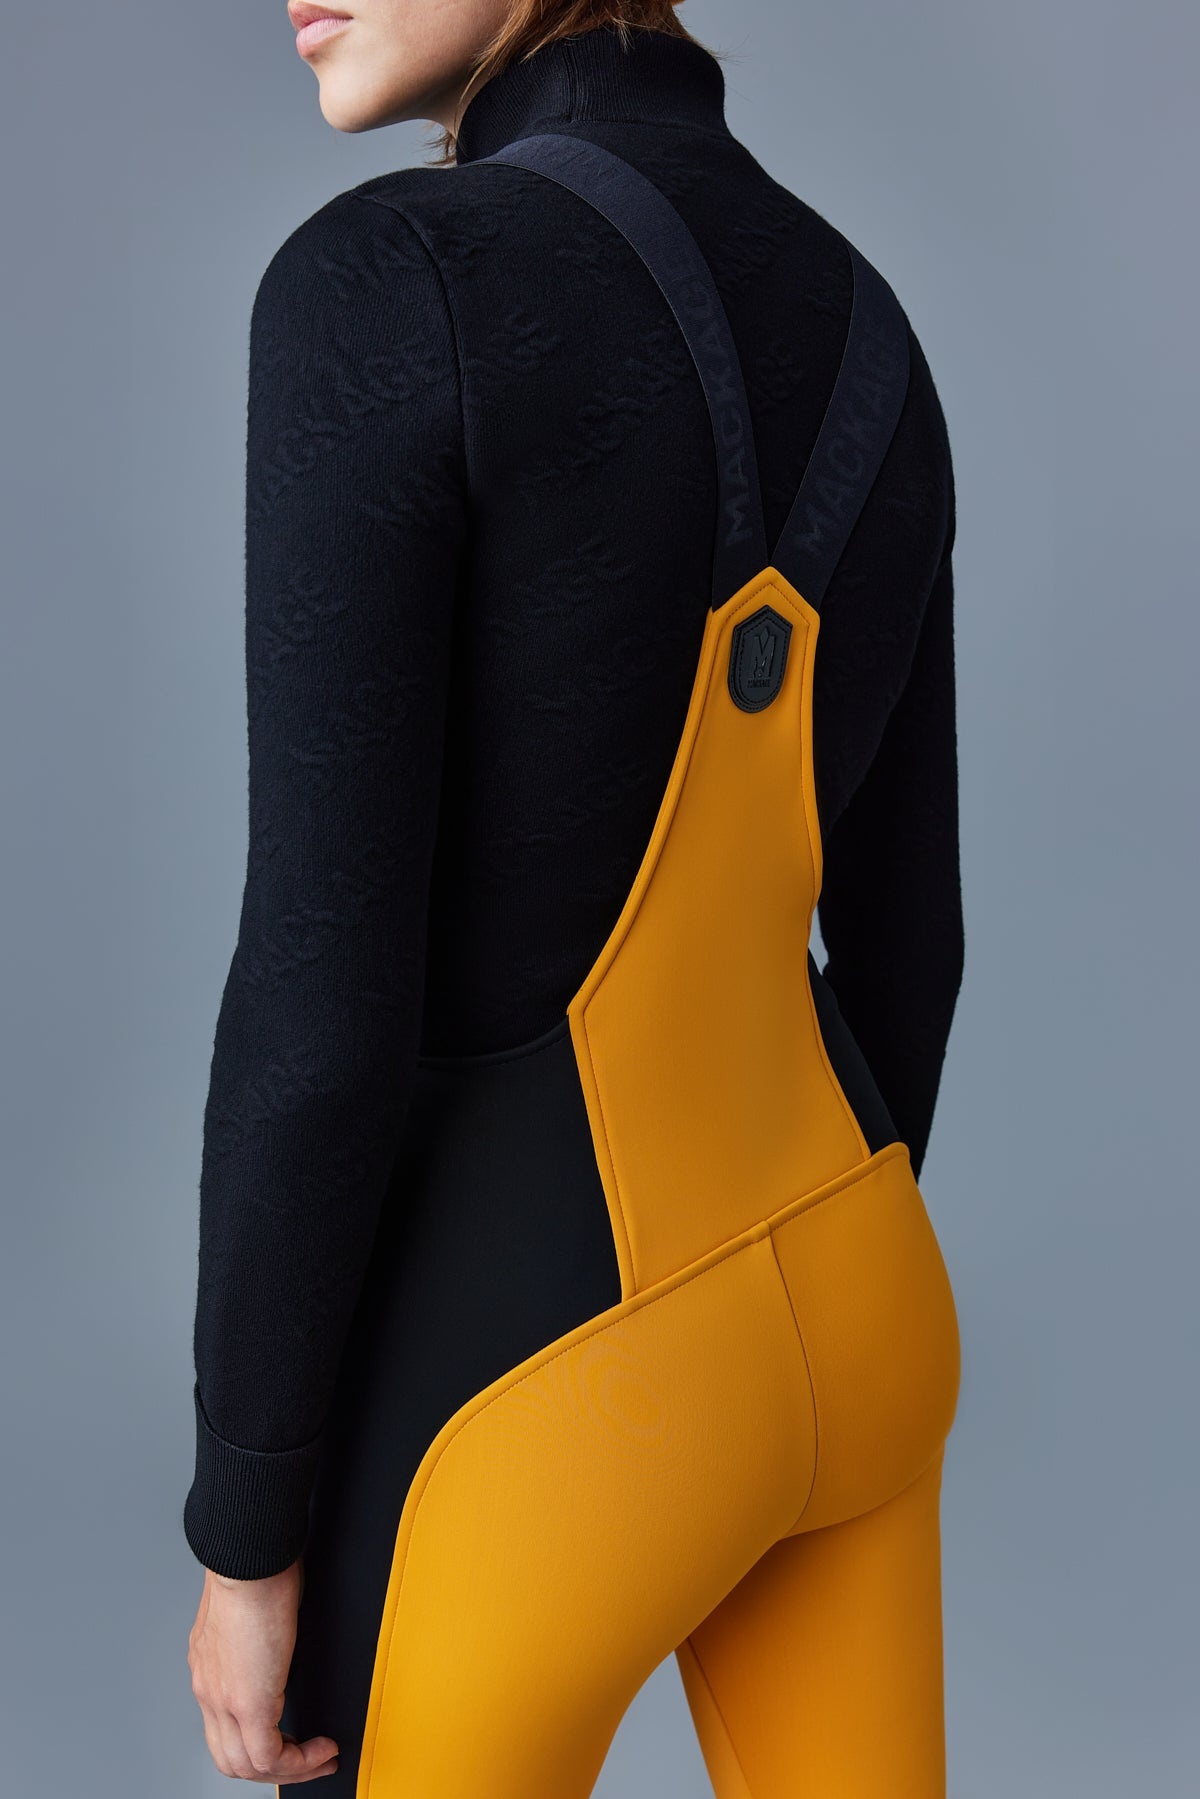 GIA Agile-360 fitted ski suspenders - 5